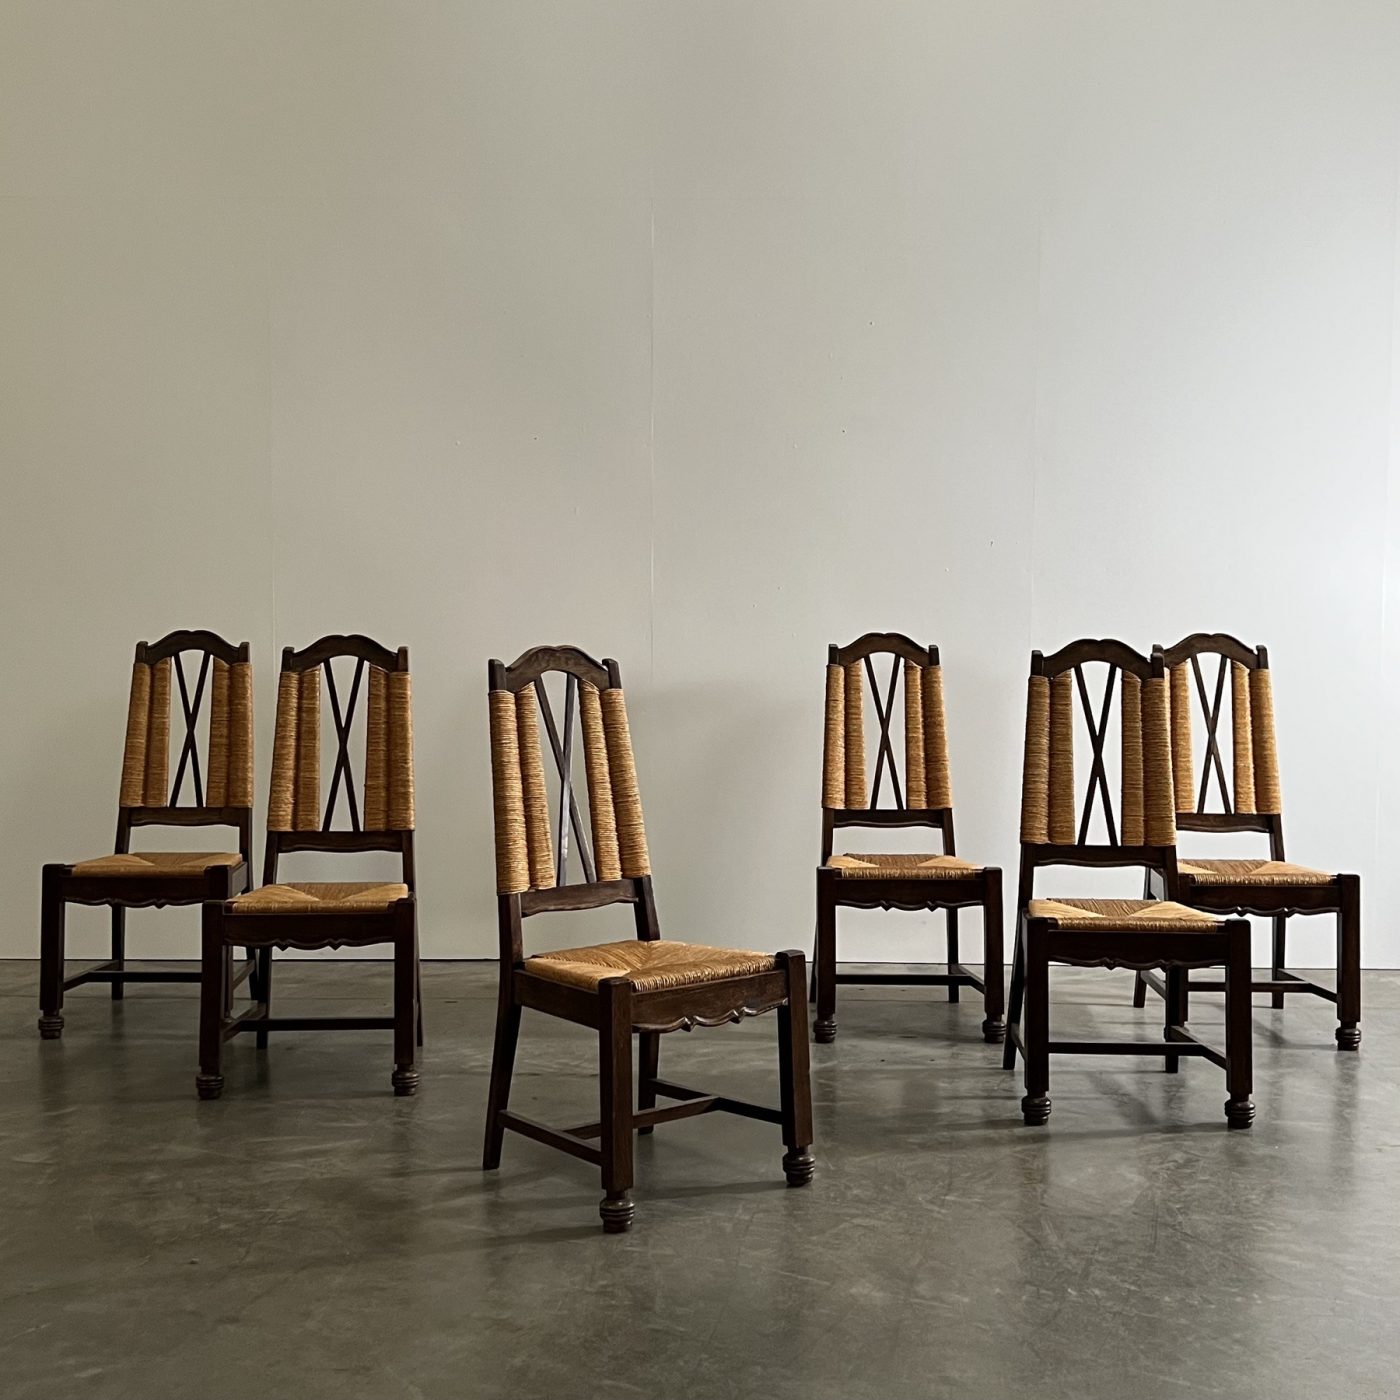 objet-vagabond-oak-chairs0005